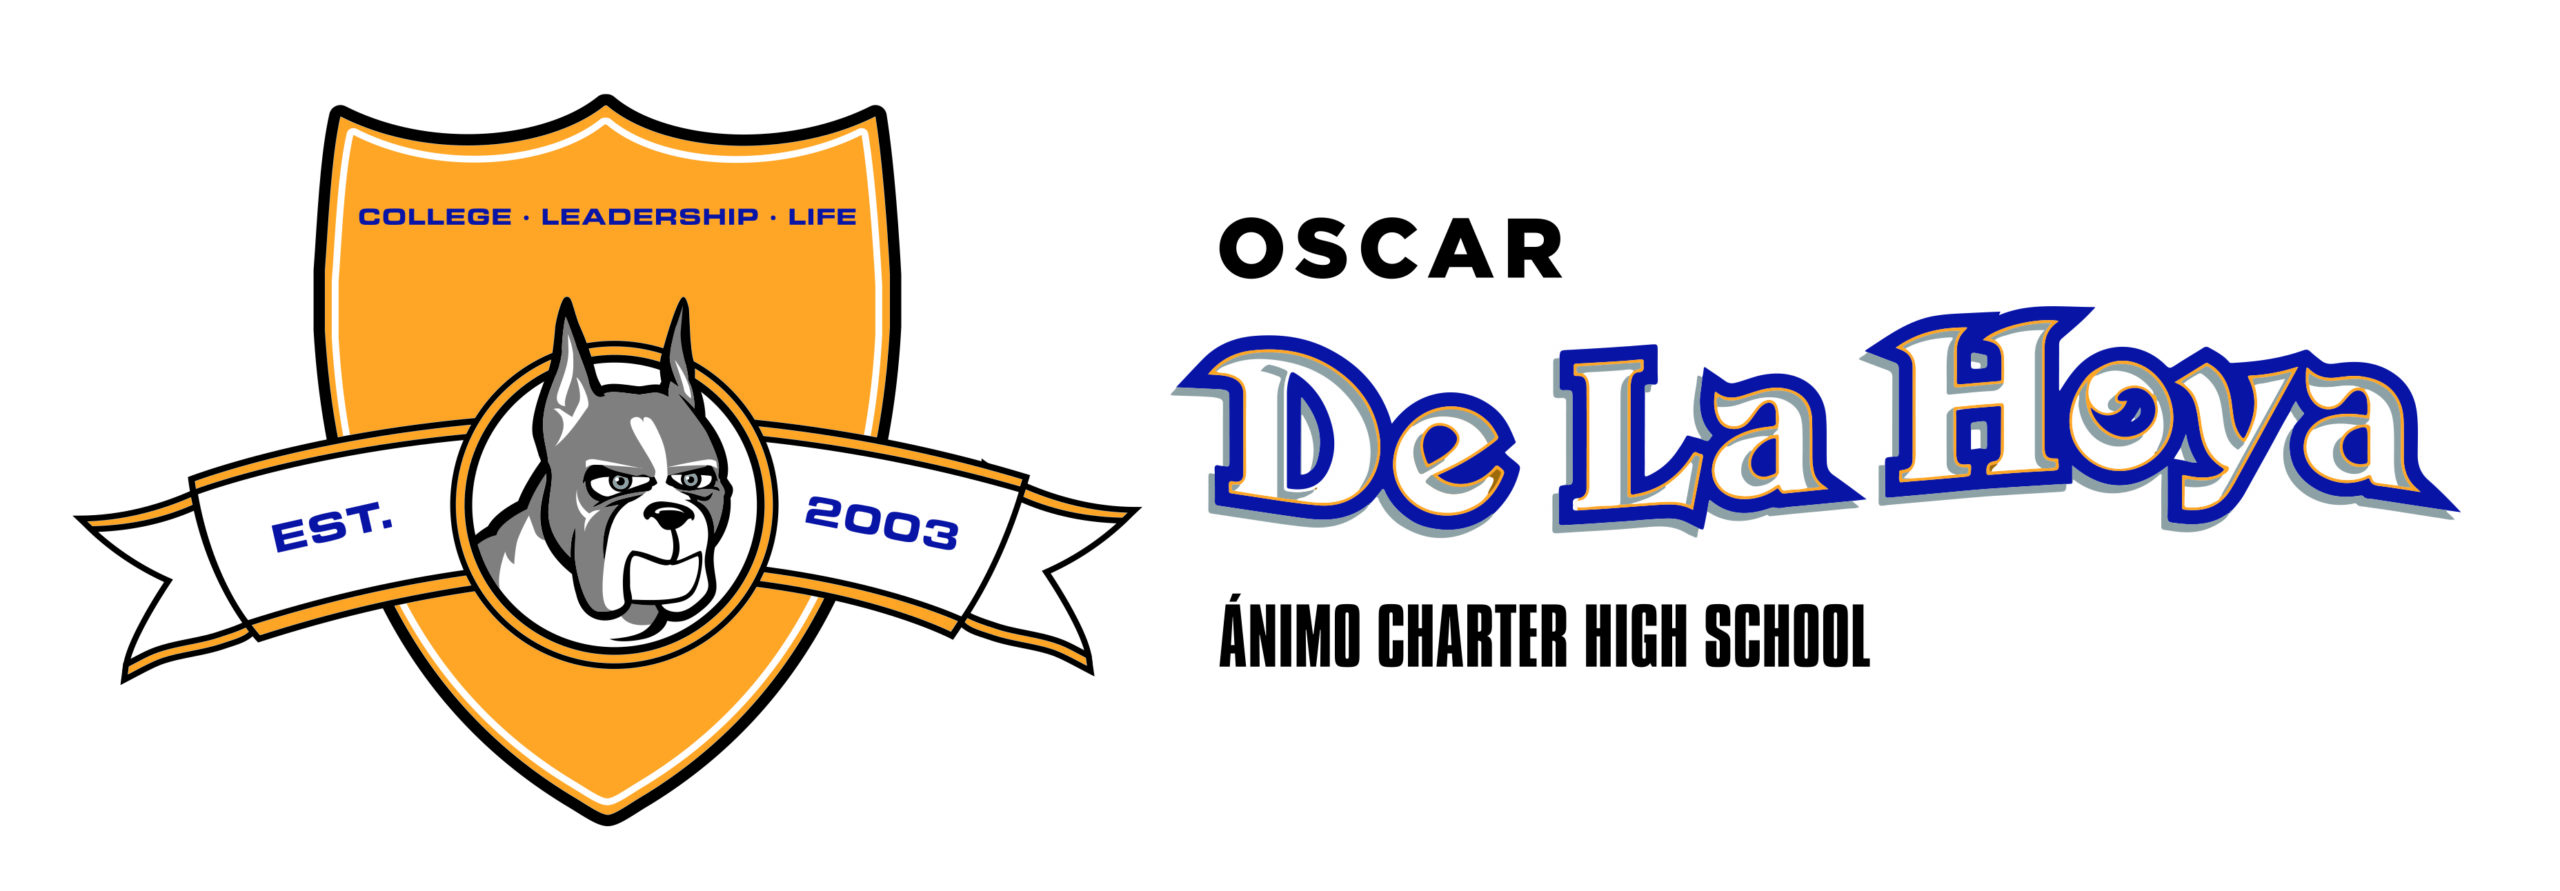 Oscar De La Hoya Ánimo Charter High School